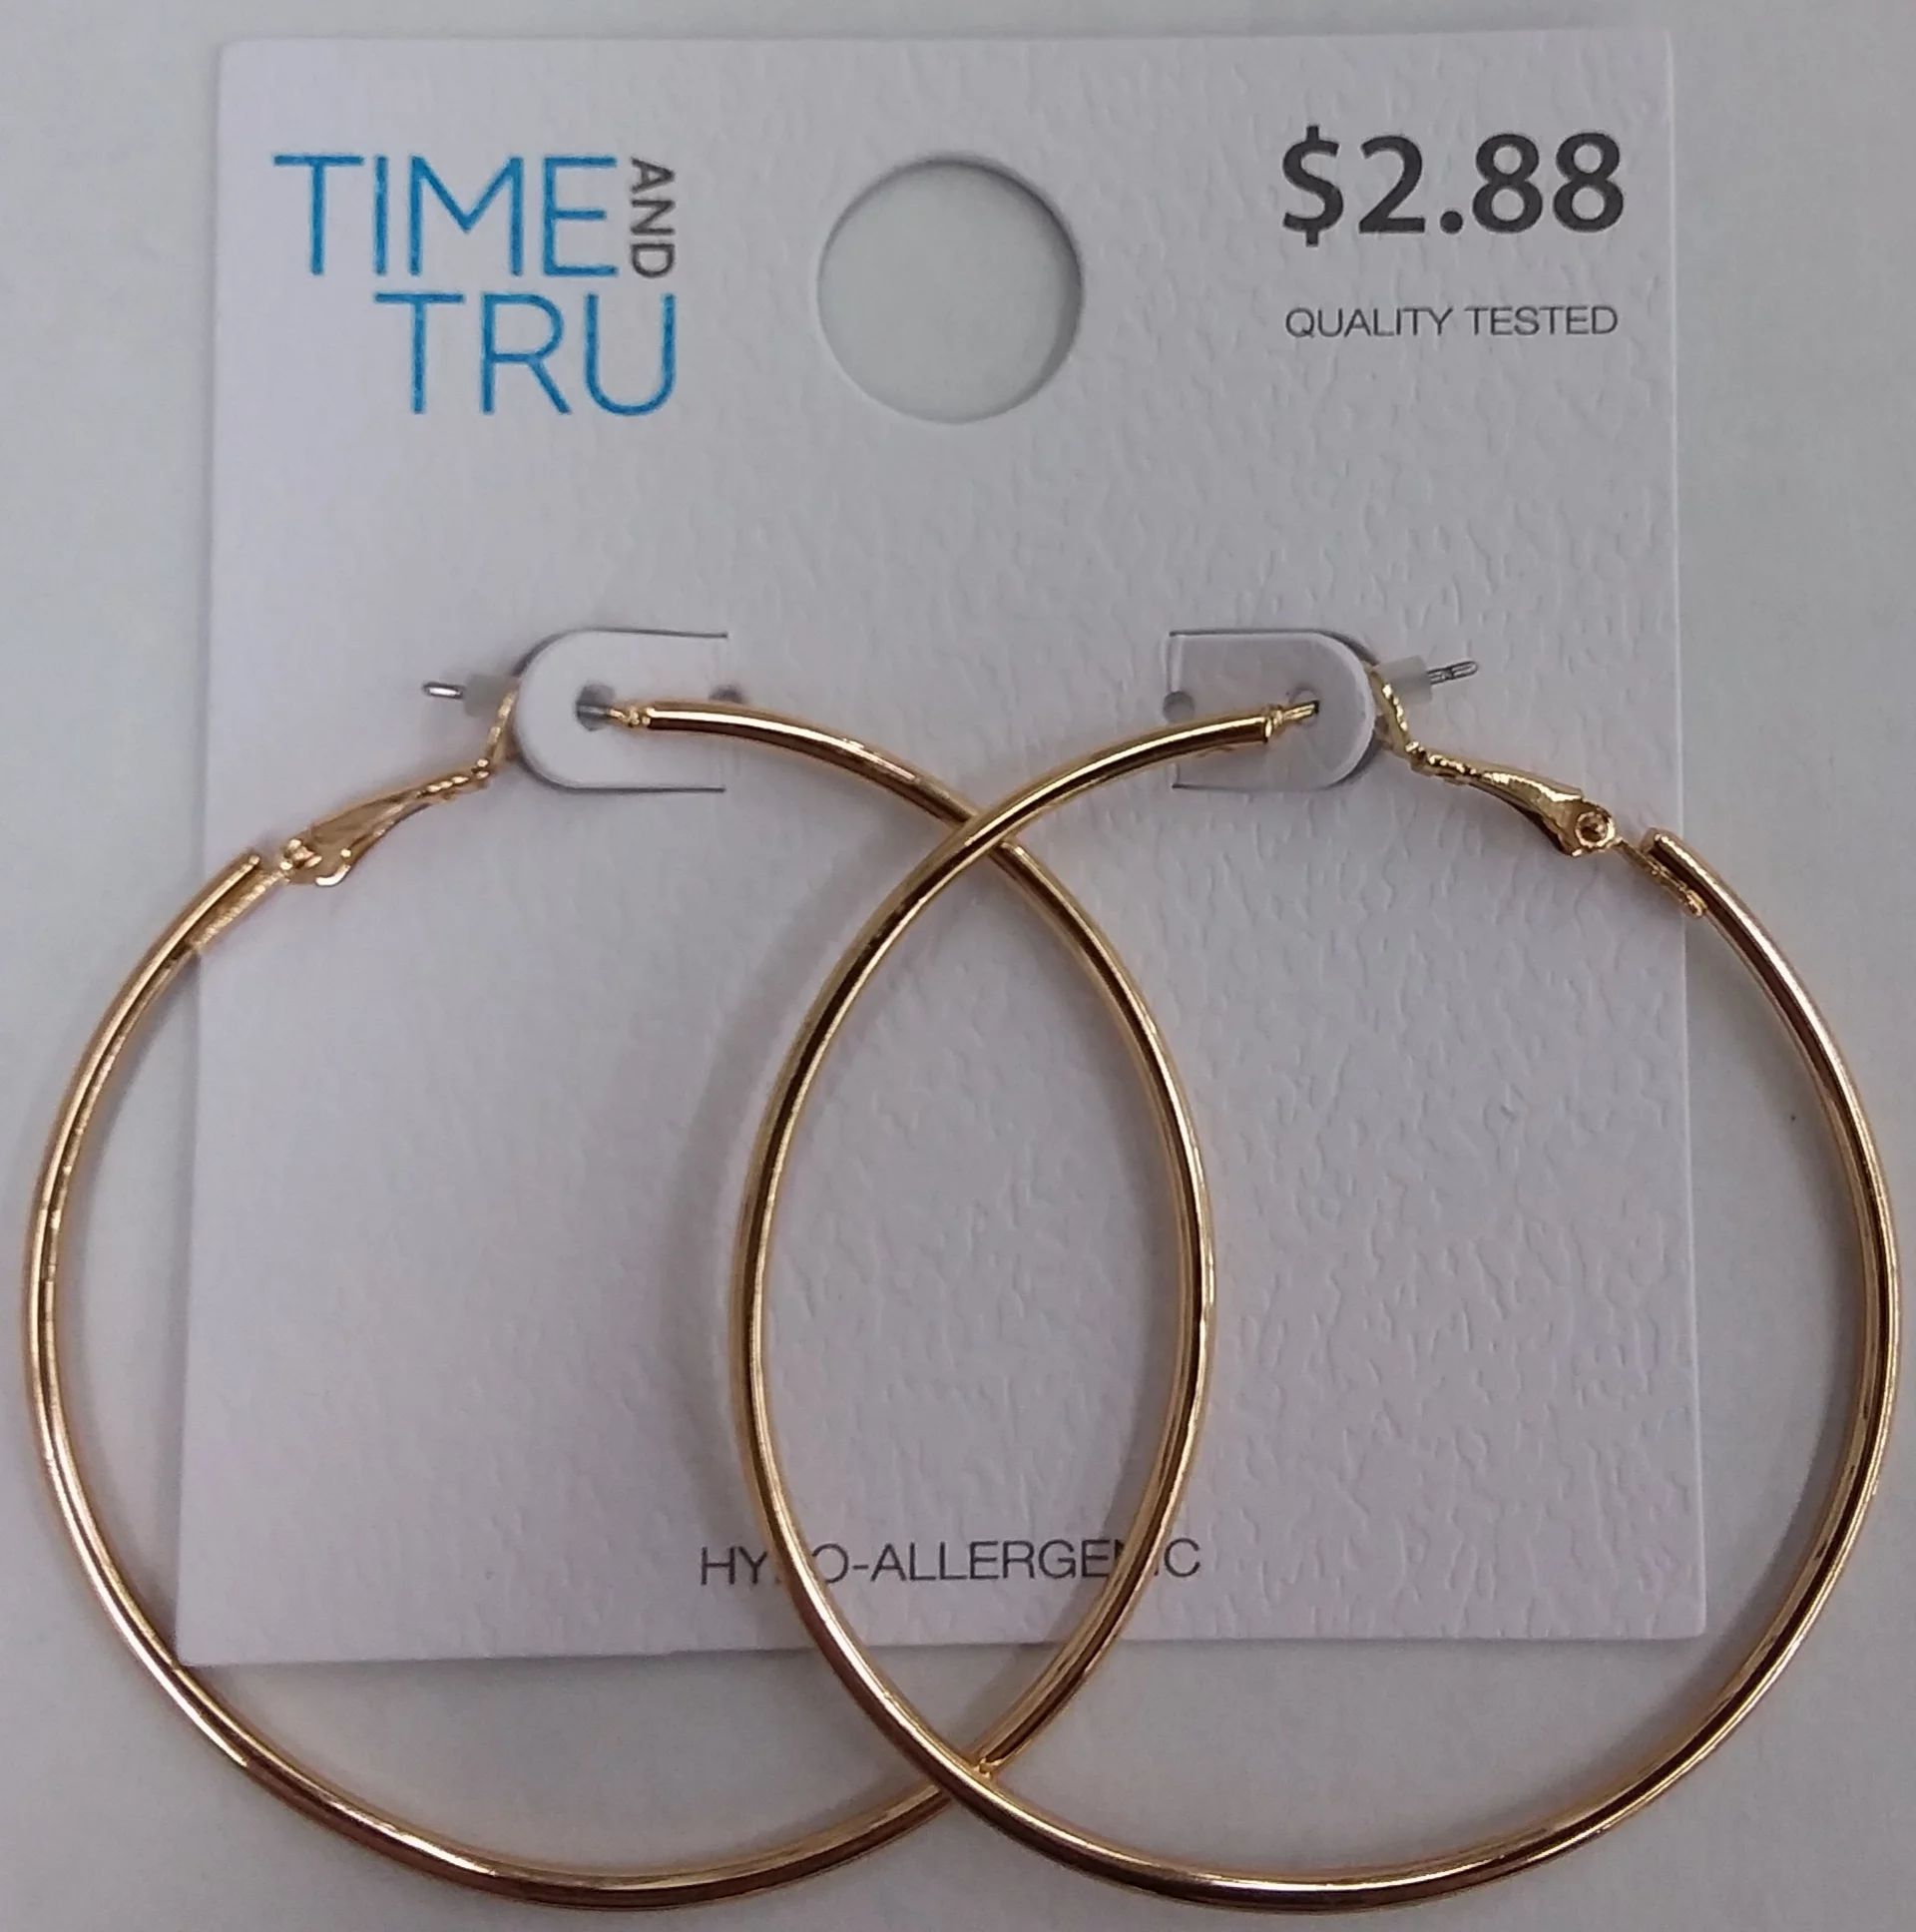 Time And Tru Gold Hoop Earring | Walmart (US)